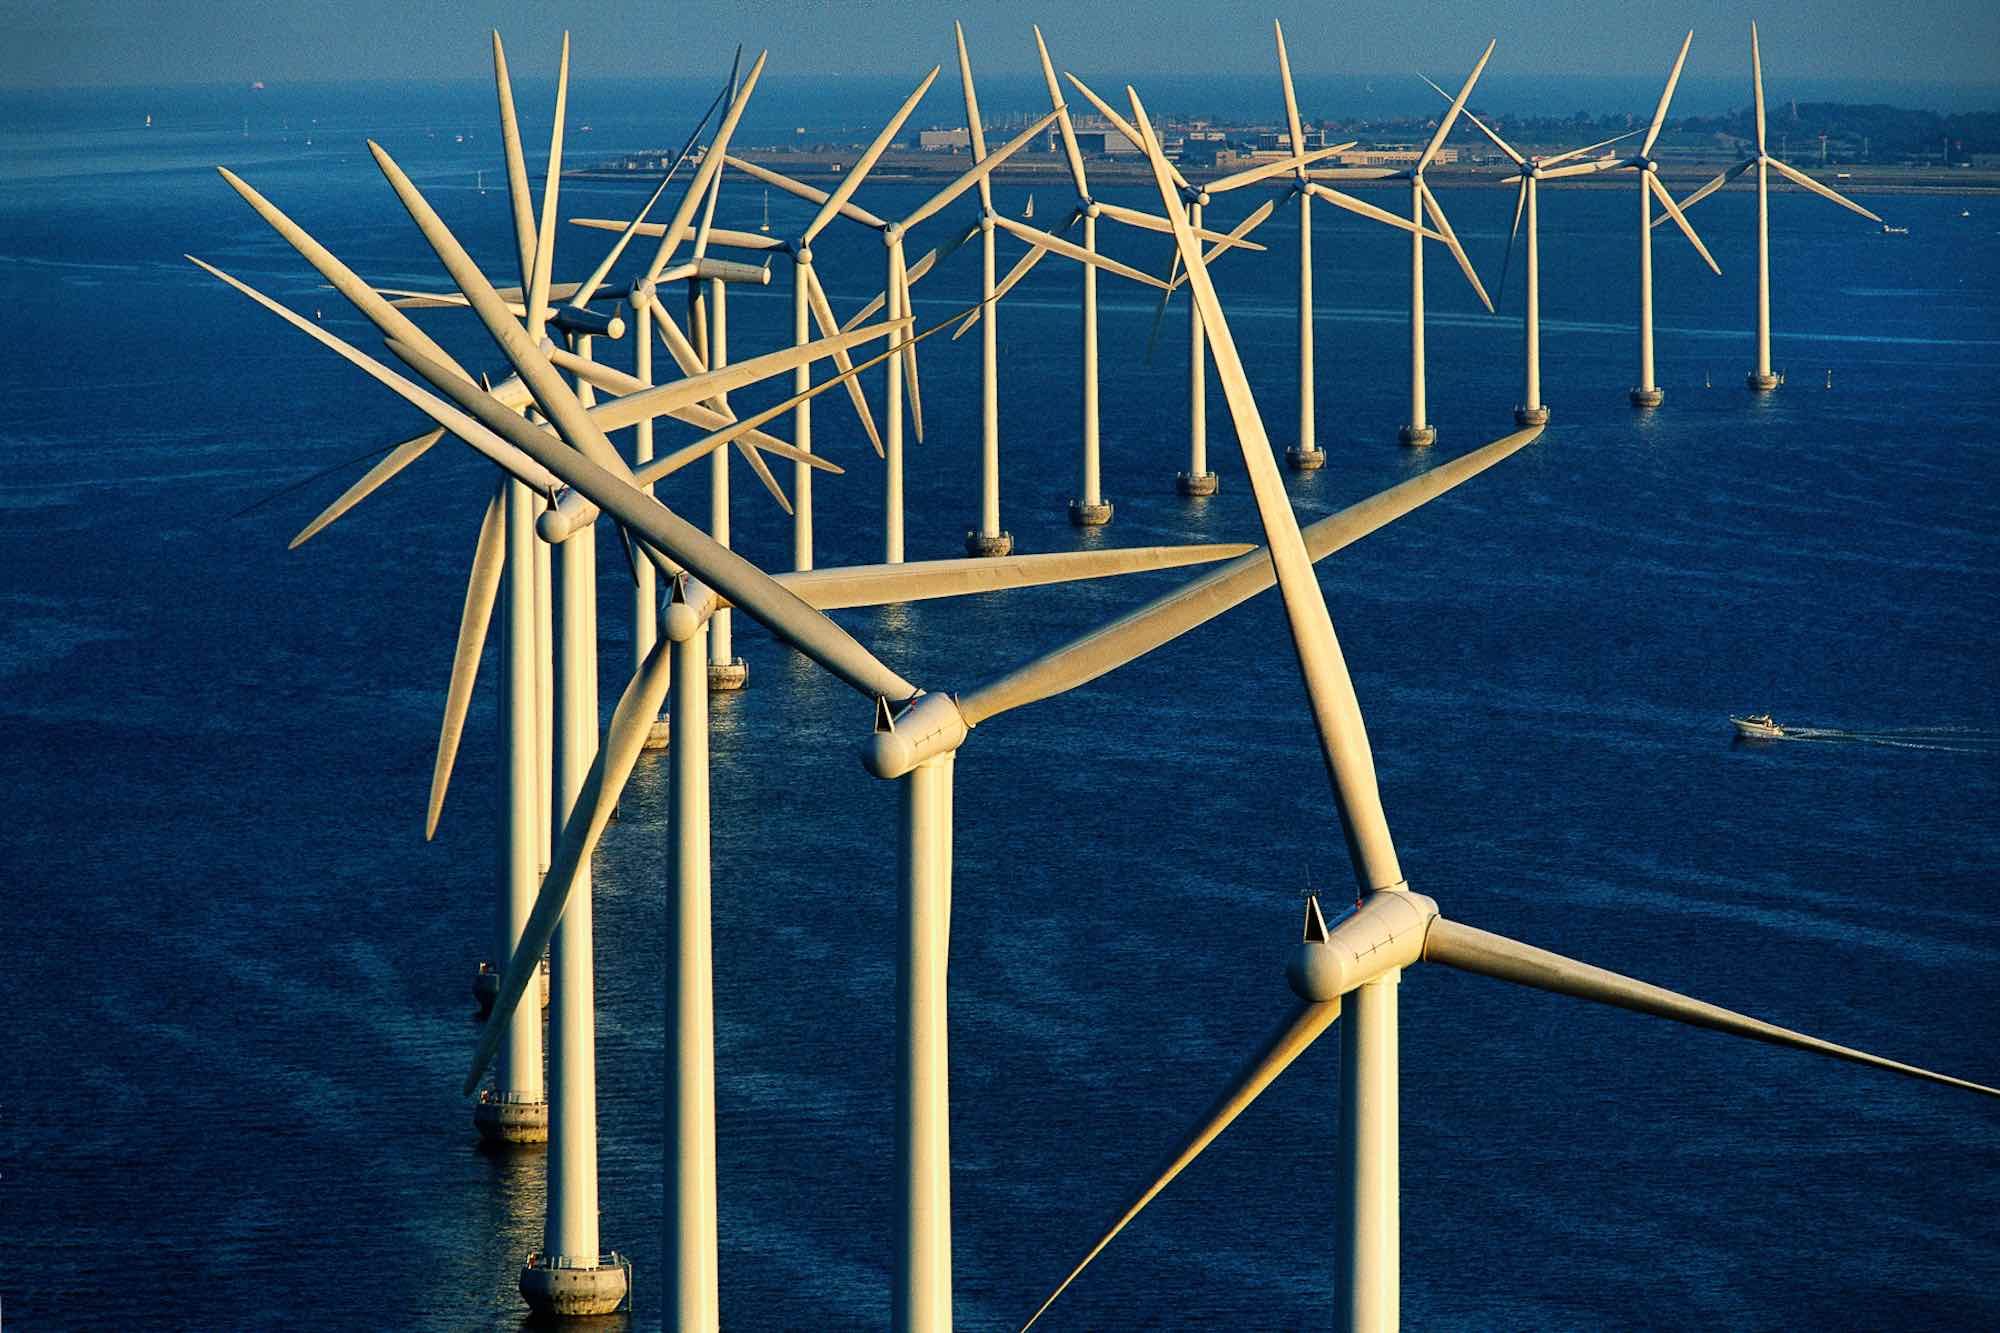 Wind farm, Denmark - Yann Arthus-Bertrand Photography